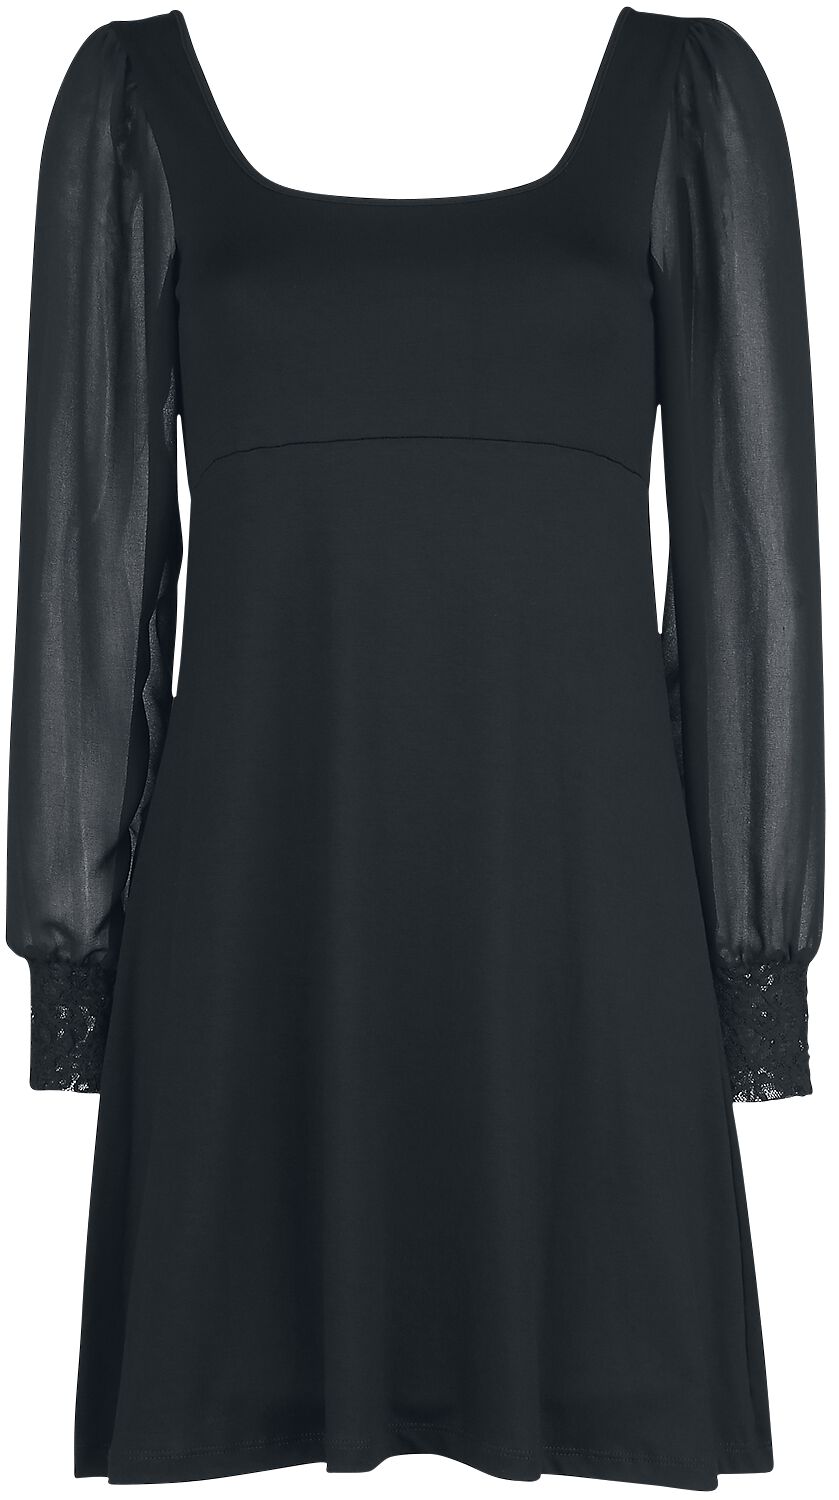 Outer Vision Dress Bet Kurzes Kleid schwarz in XL